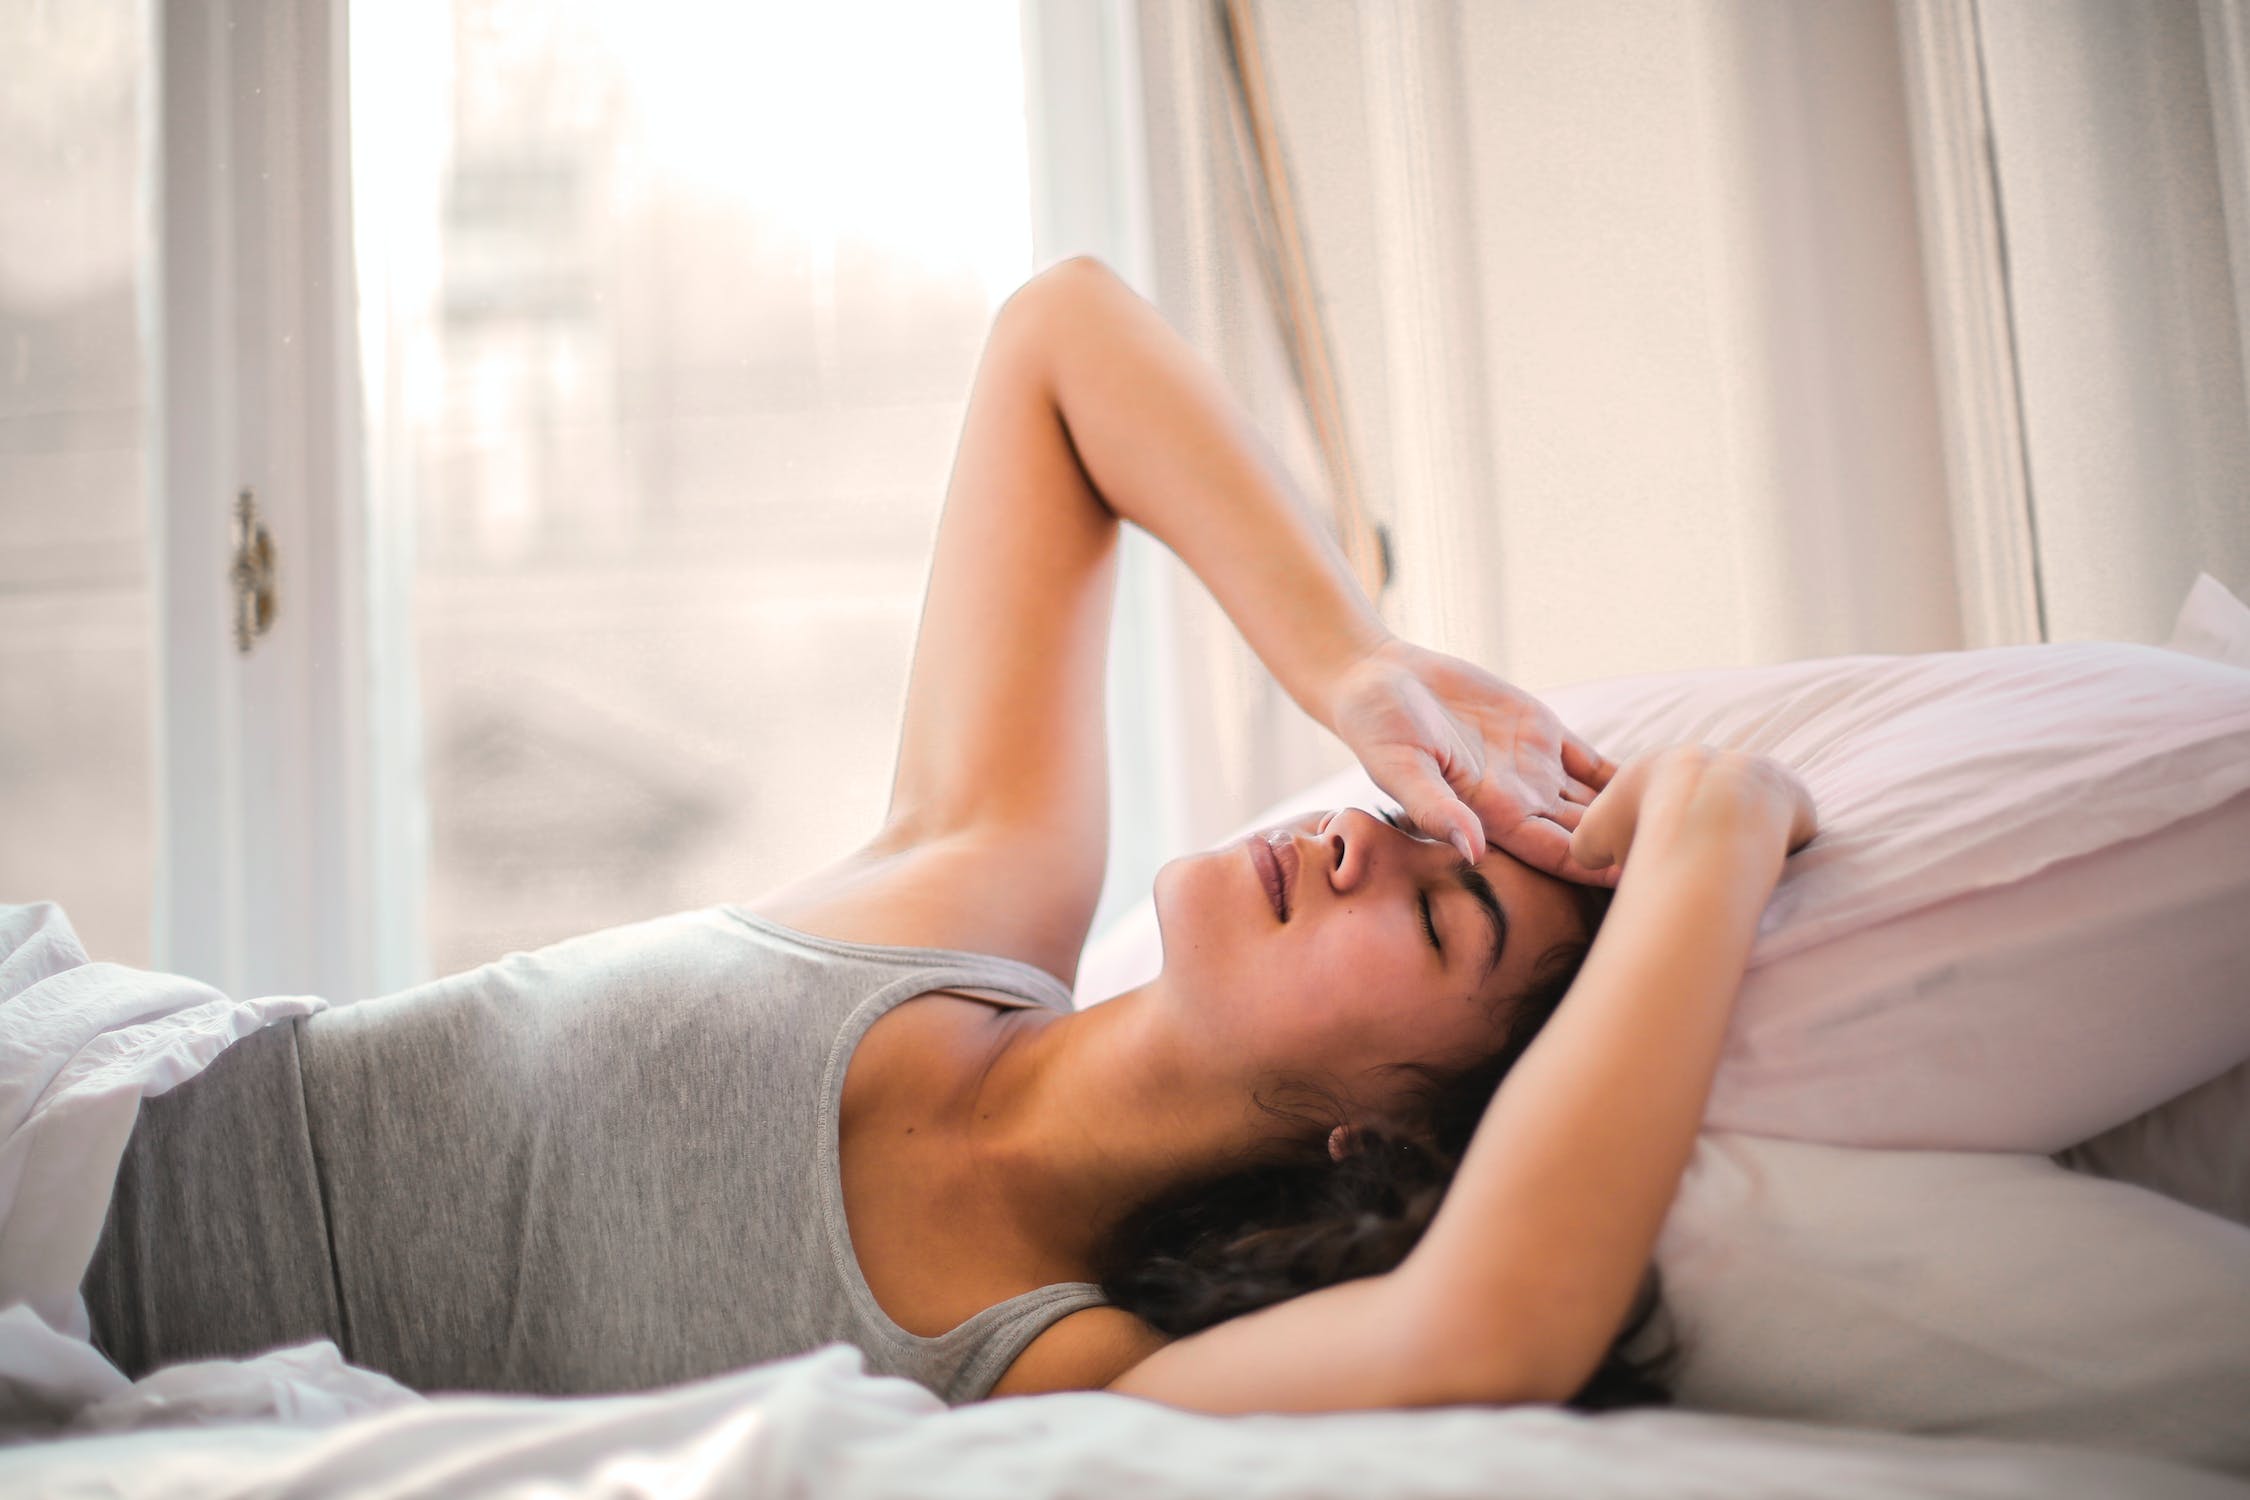 Woman lying down waking up with a headache. Why do I wake up with a headache?